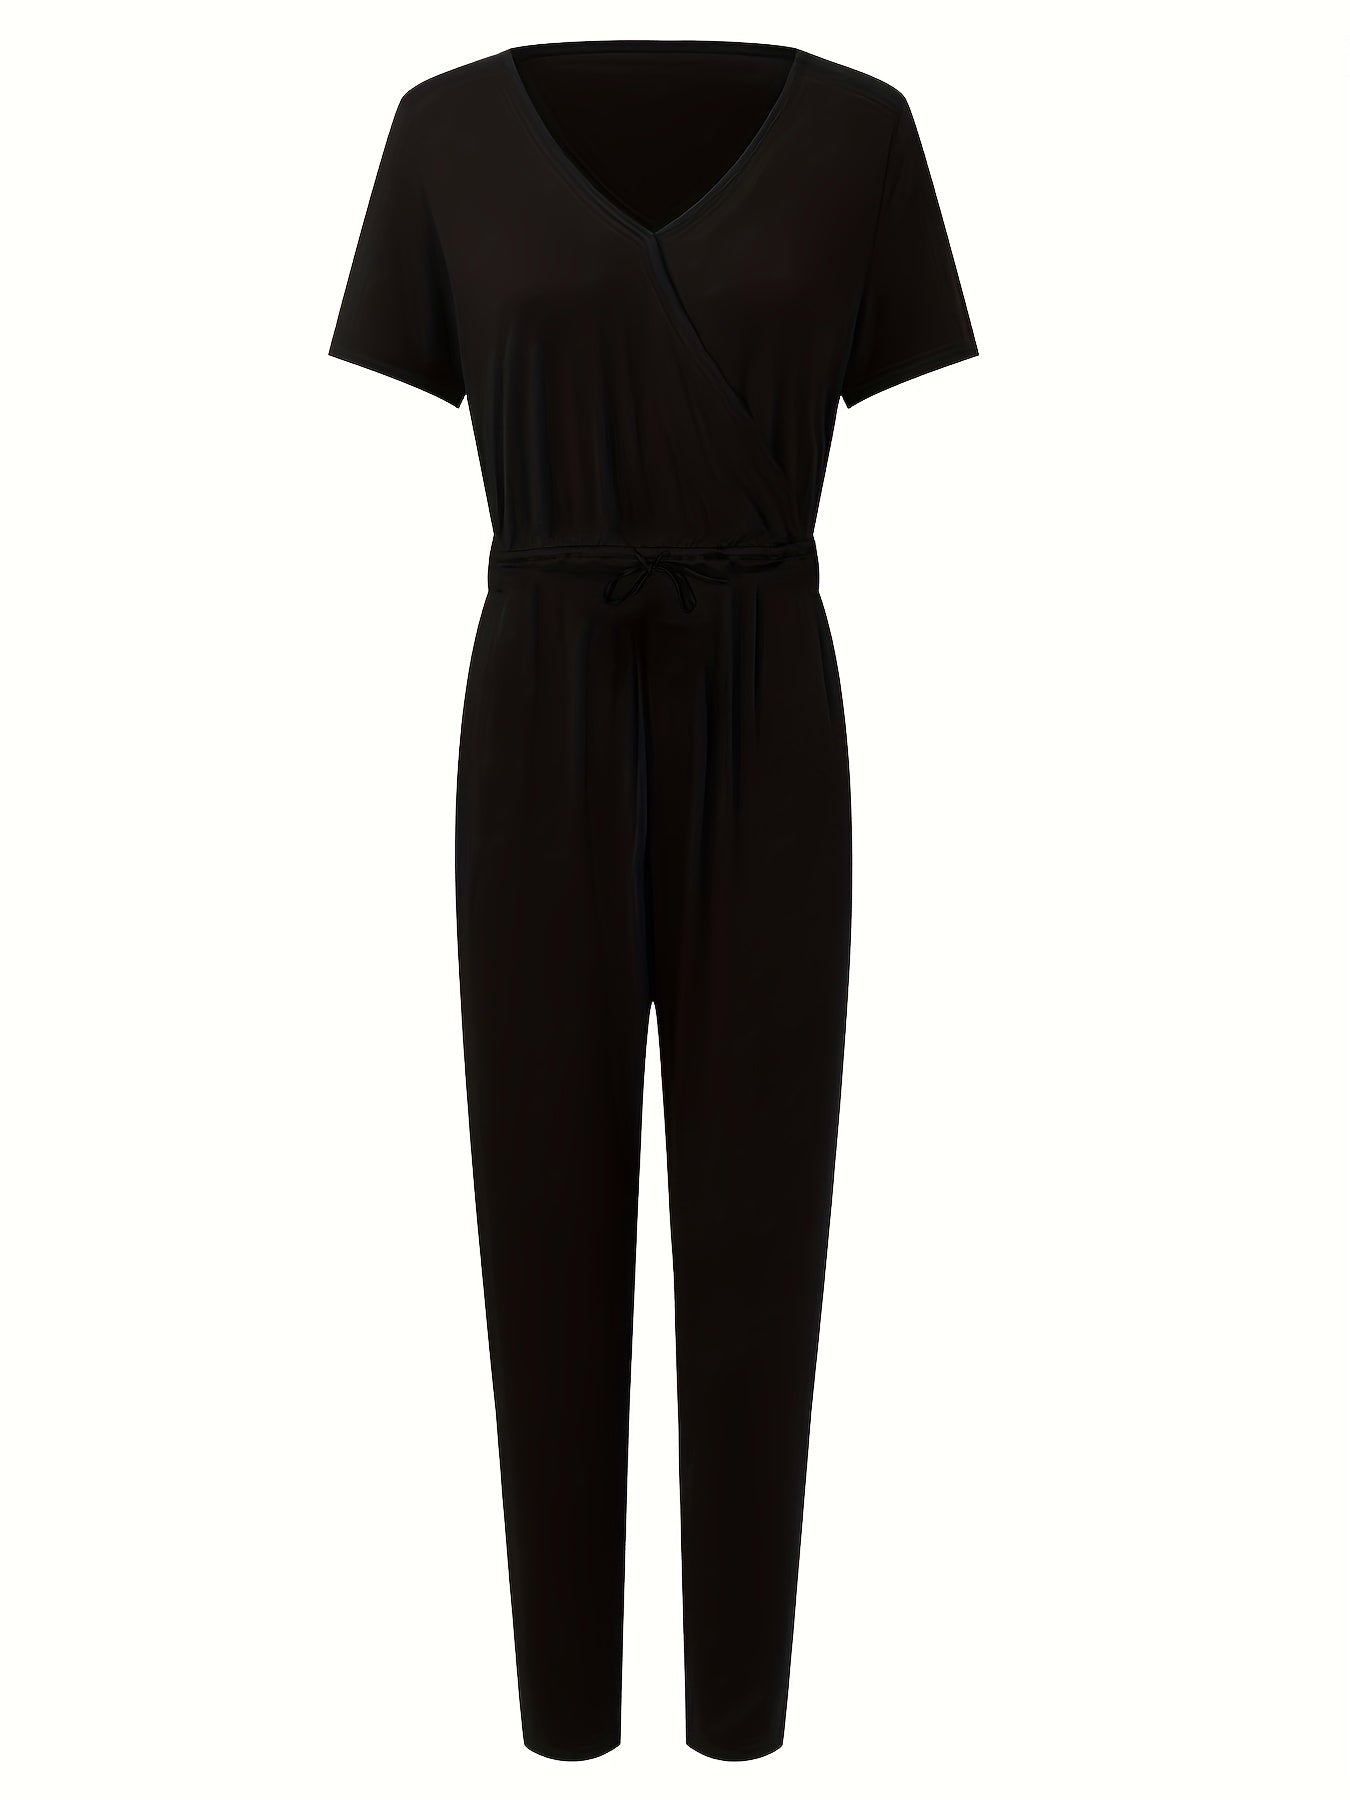 Vzyzv Solid Drawstring Waist V-neck Jumpsuit, Casual Short Sleeve Jumpsuit For Spring & Summer, Women's Clothing